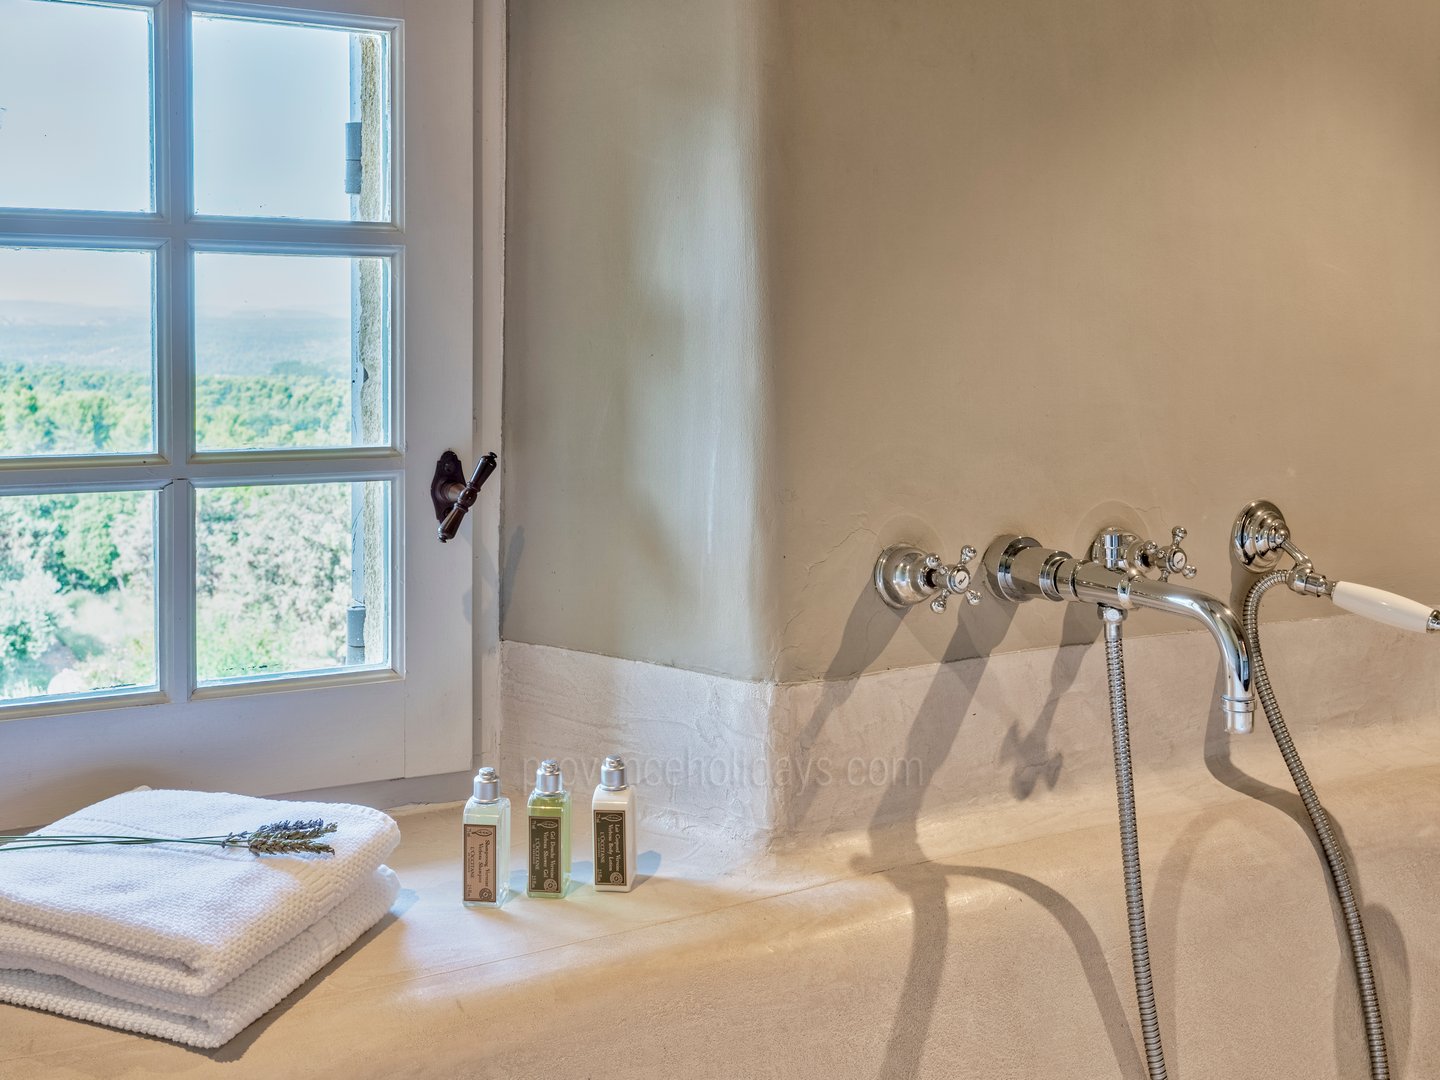 70 - Domaine de la Sainte Victoire: Villa: Bathroom